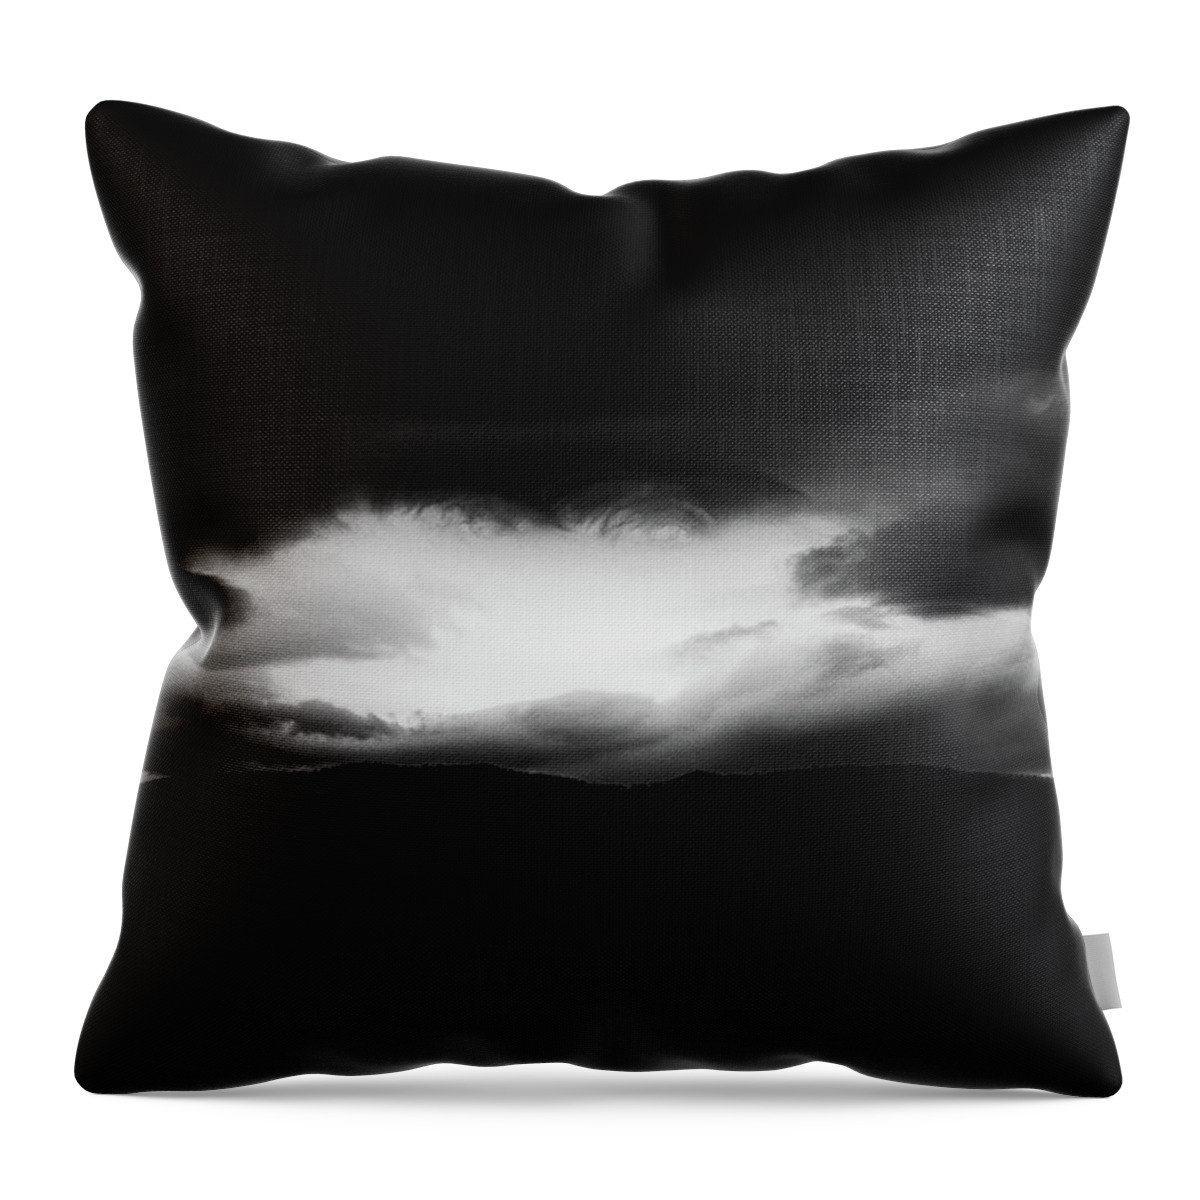 Black & White Throw Pillow featuring the photograph Black Hole Cloud by Louis Dallara